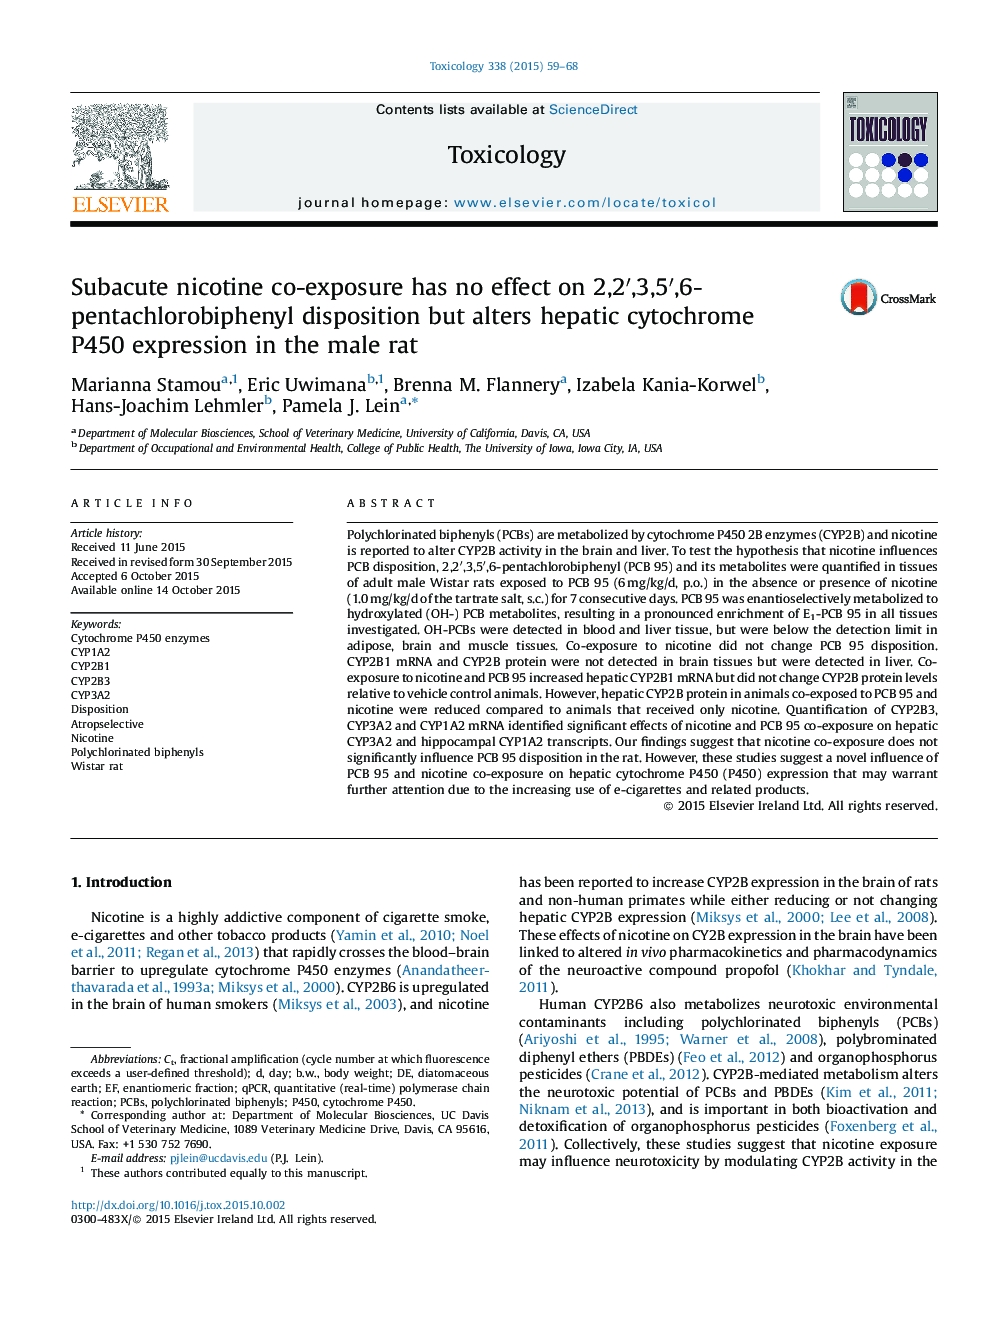 Subacute nicotine co-exposure has no effect on 2,2â²,3,5â²,6- pentachlorobiphenyl disposition but alters hepatic cytochrome P450 expression in the male rat